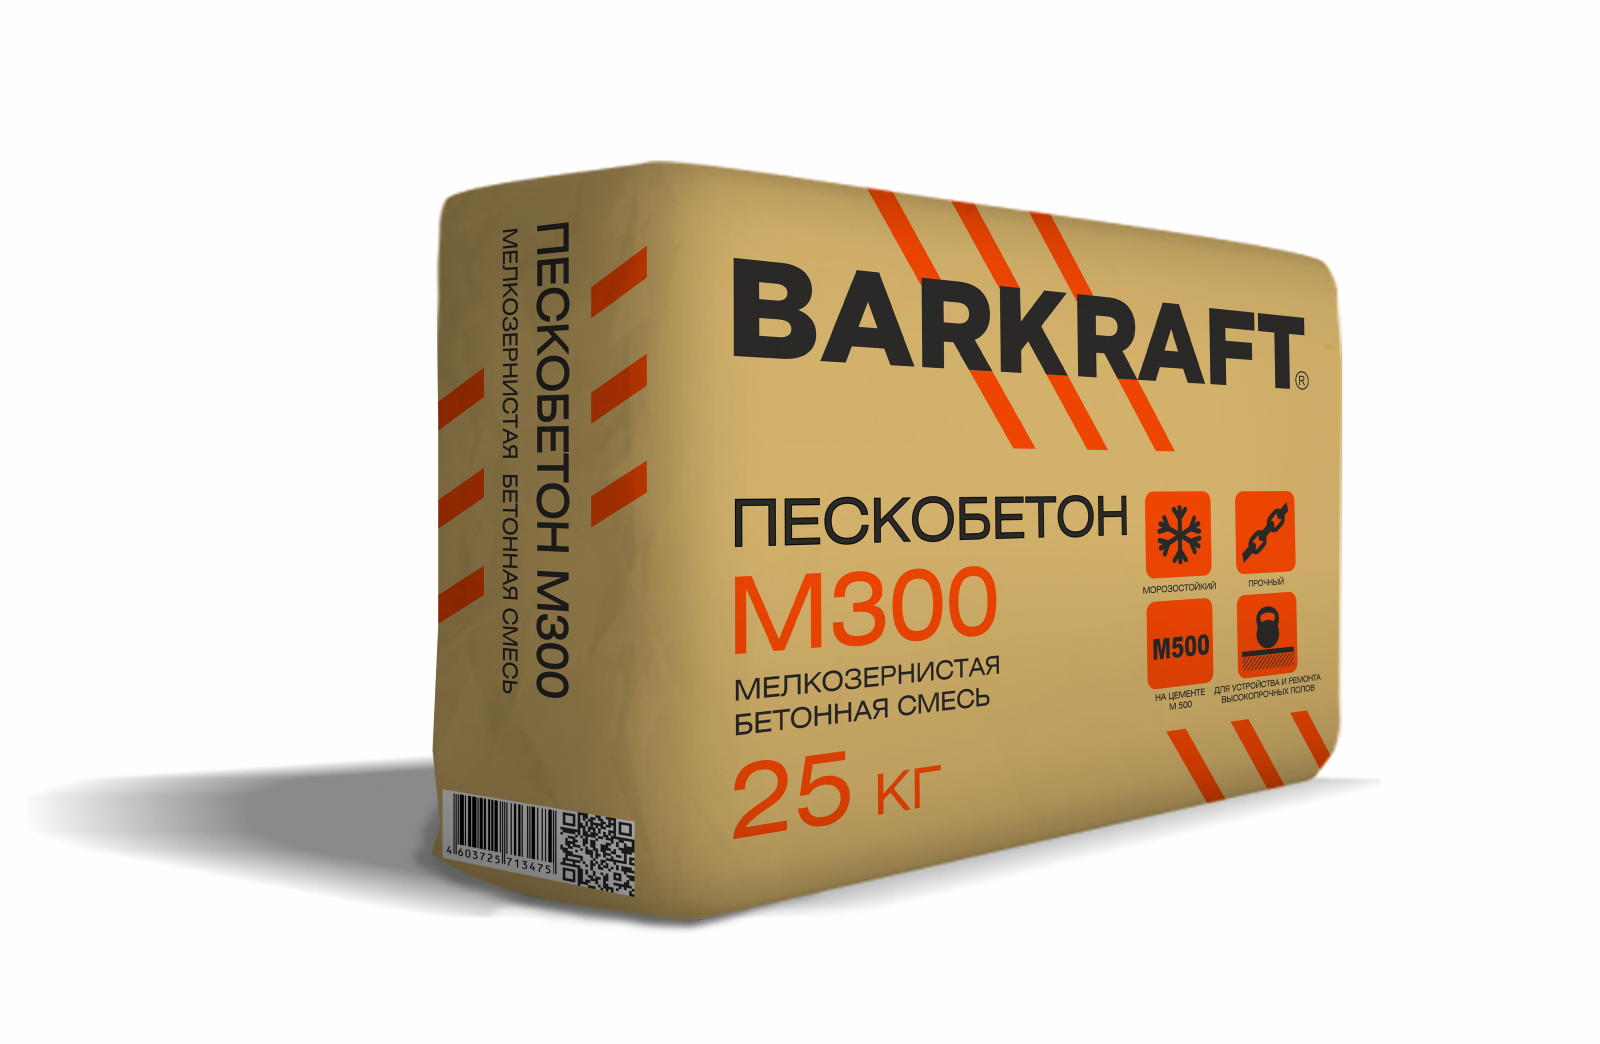 ПЕСКОБЕТОН М300 BARKRAFT, 25 КГ